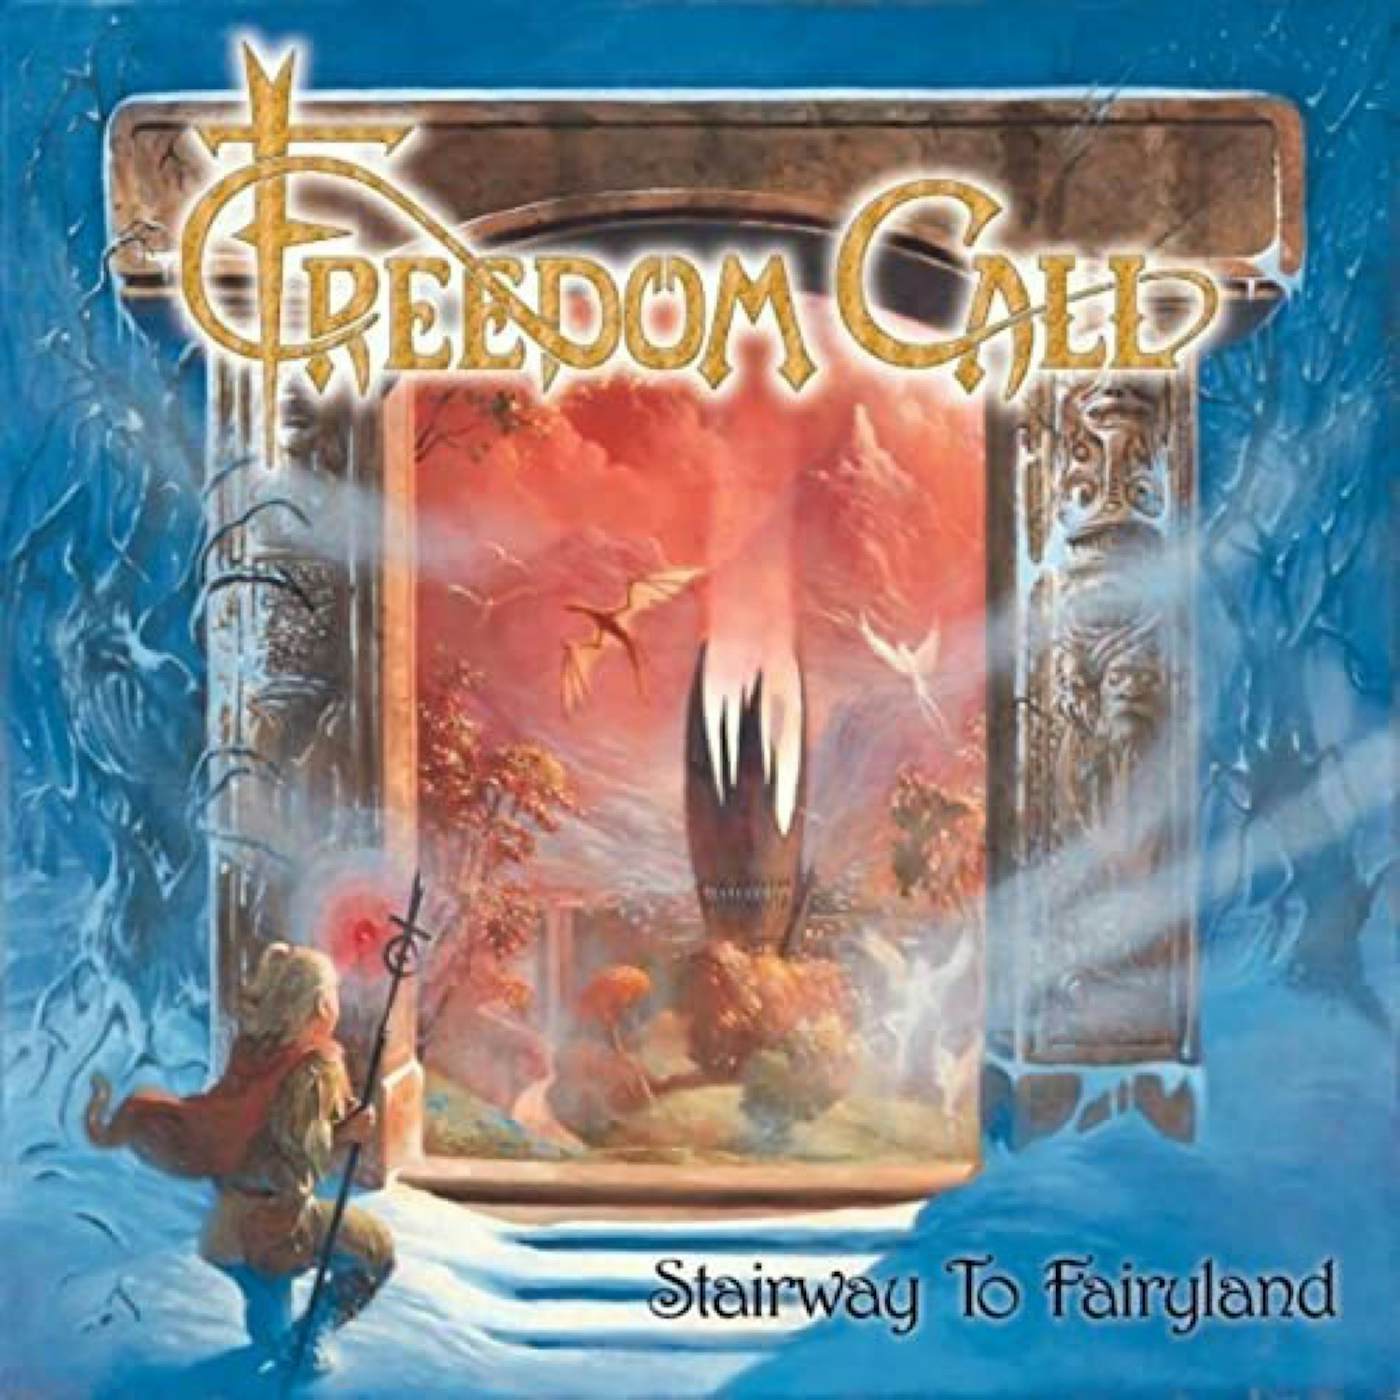 Freedom Call Stairway to Fairyland Vinyl Record